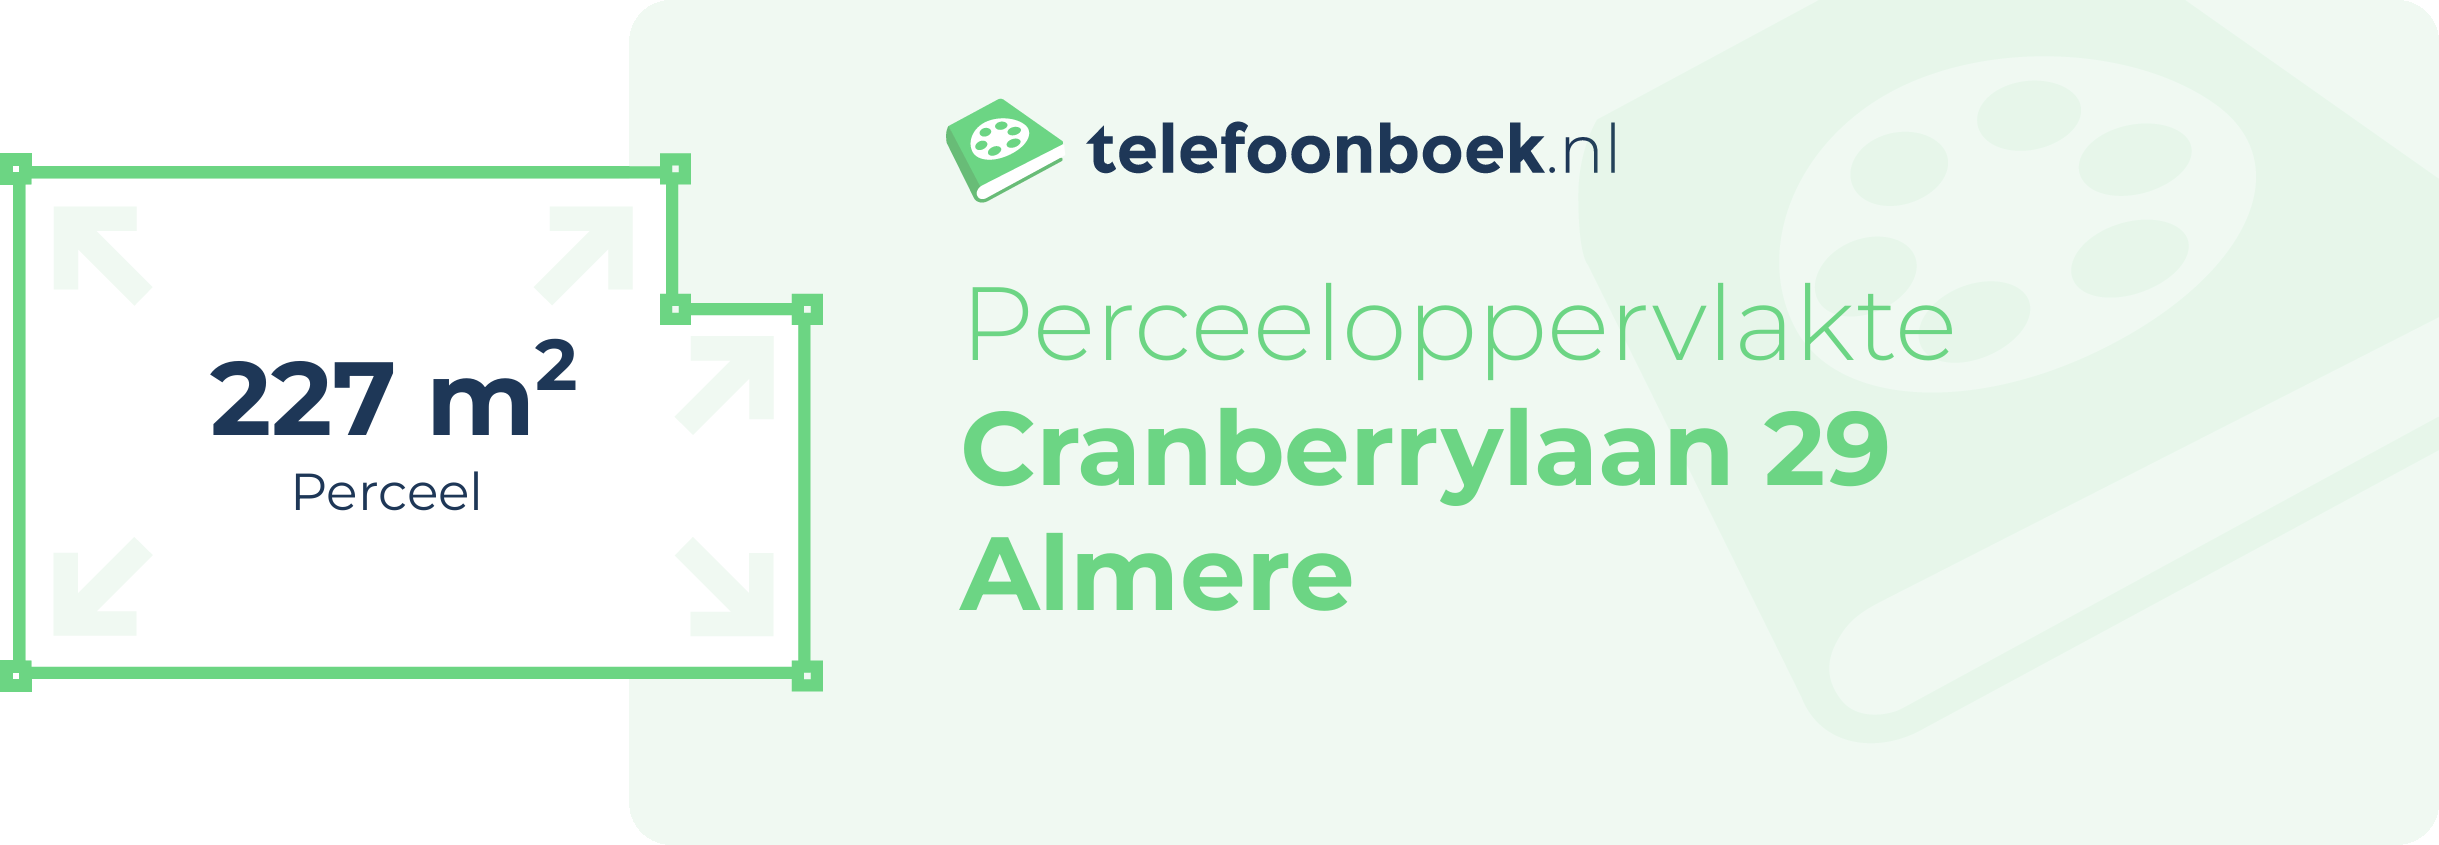 Perceeloppervlakte Cranberrylaan 29 Almere